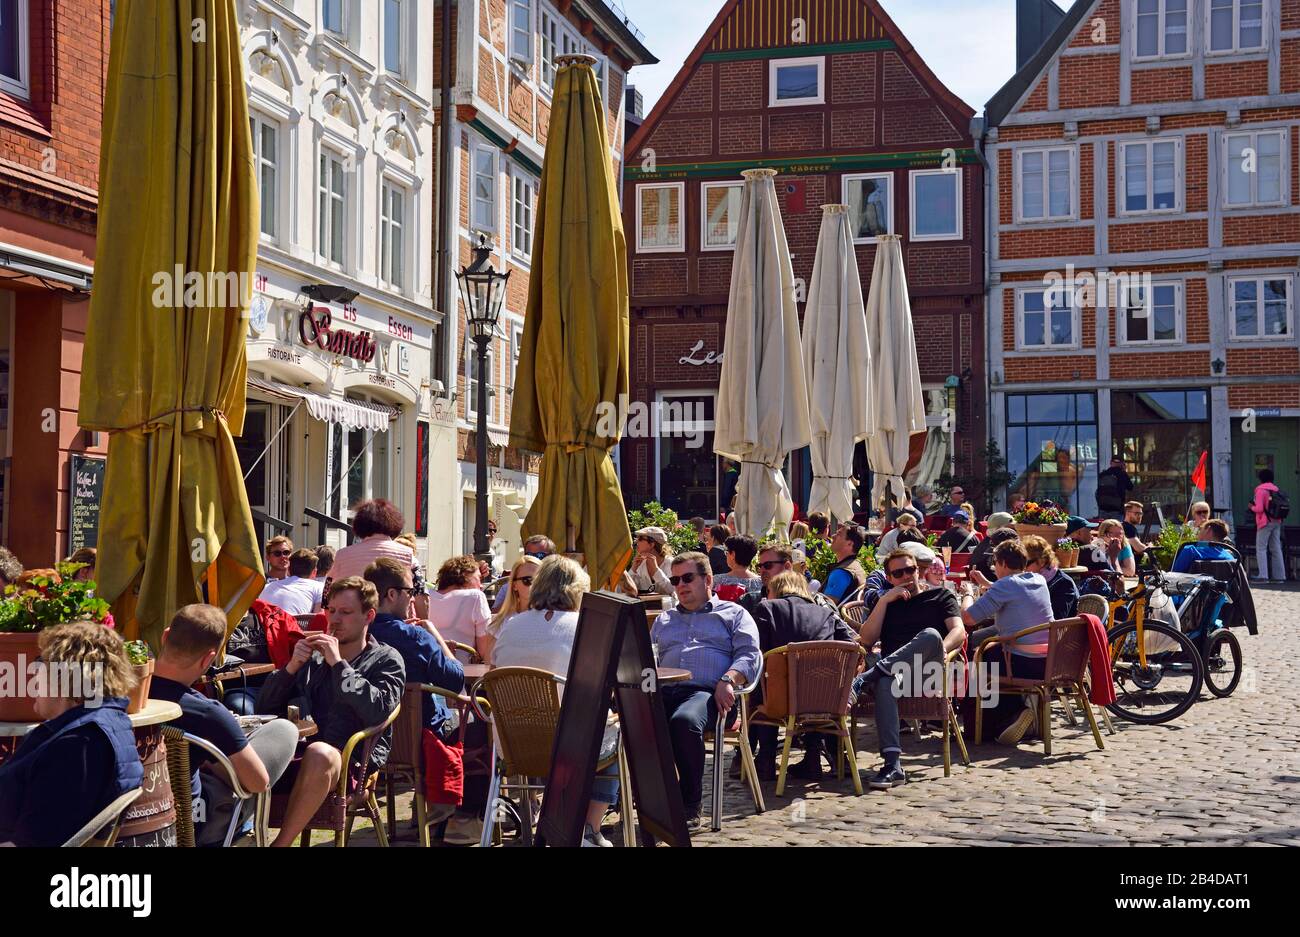 Europe, Germany, Lower Saxony, Stade, Hamburg metropolitan region, Hanseatic city, Hanseatic harbour, fish market, street café, Stock Photo